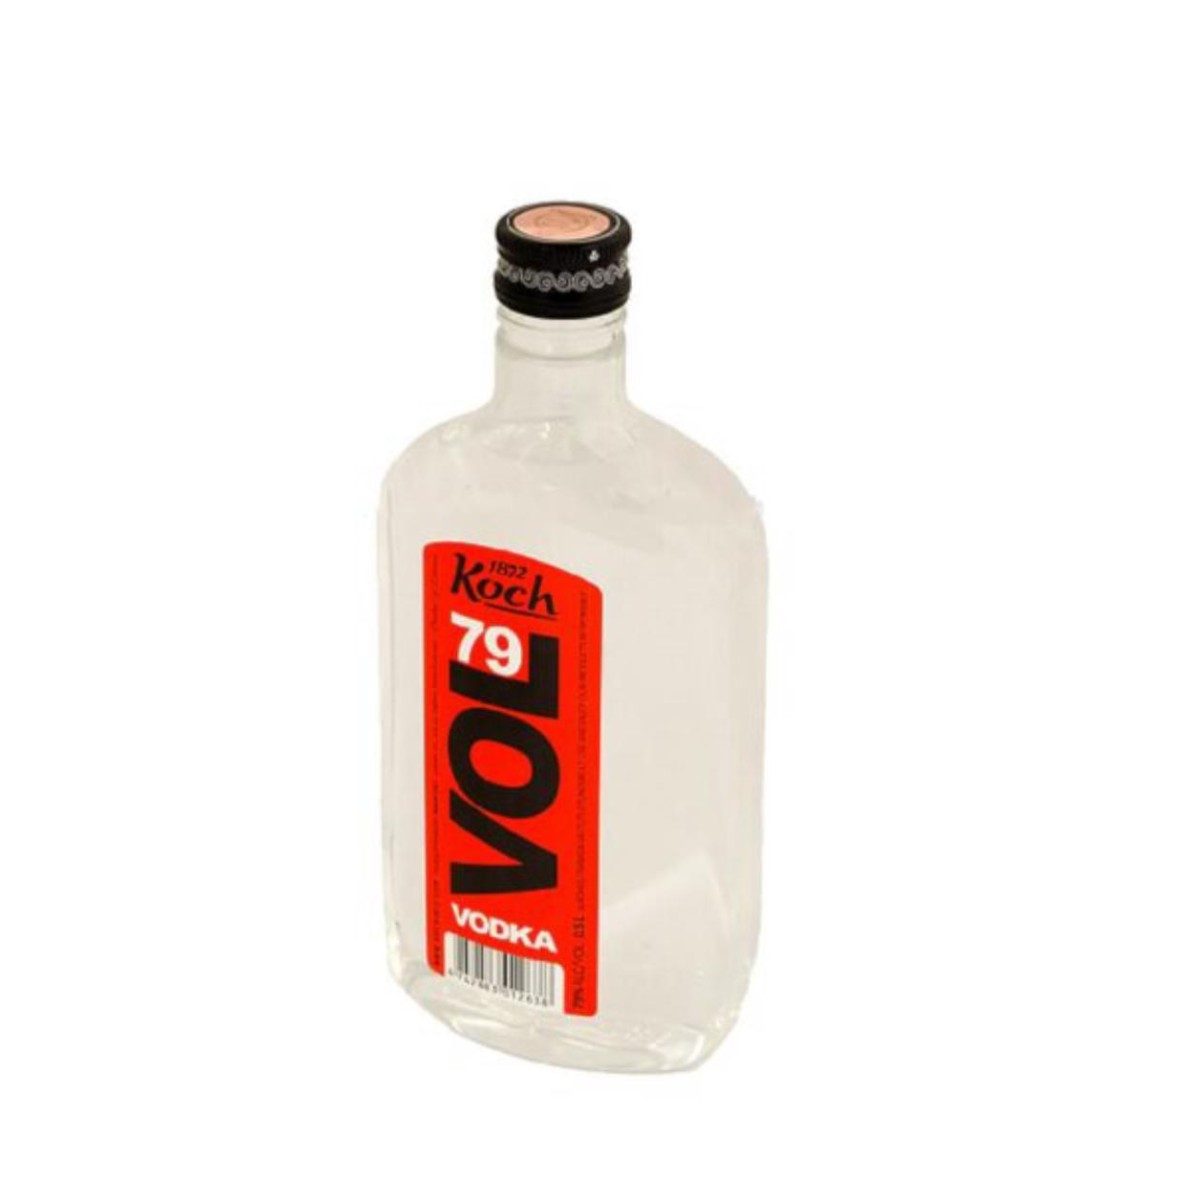 Koch Vol 79 Vodka 79% 50cl PET